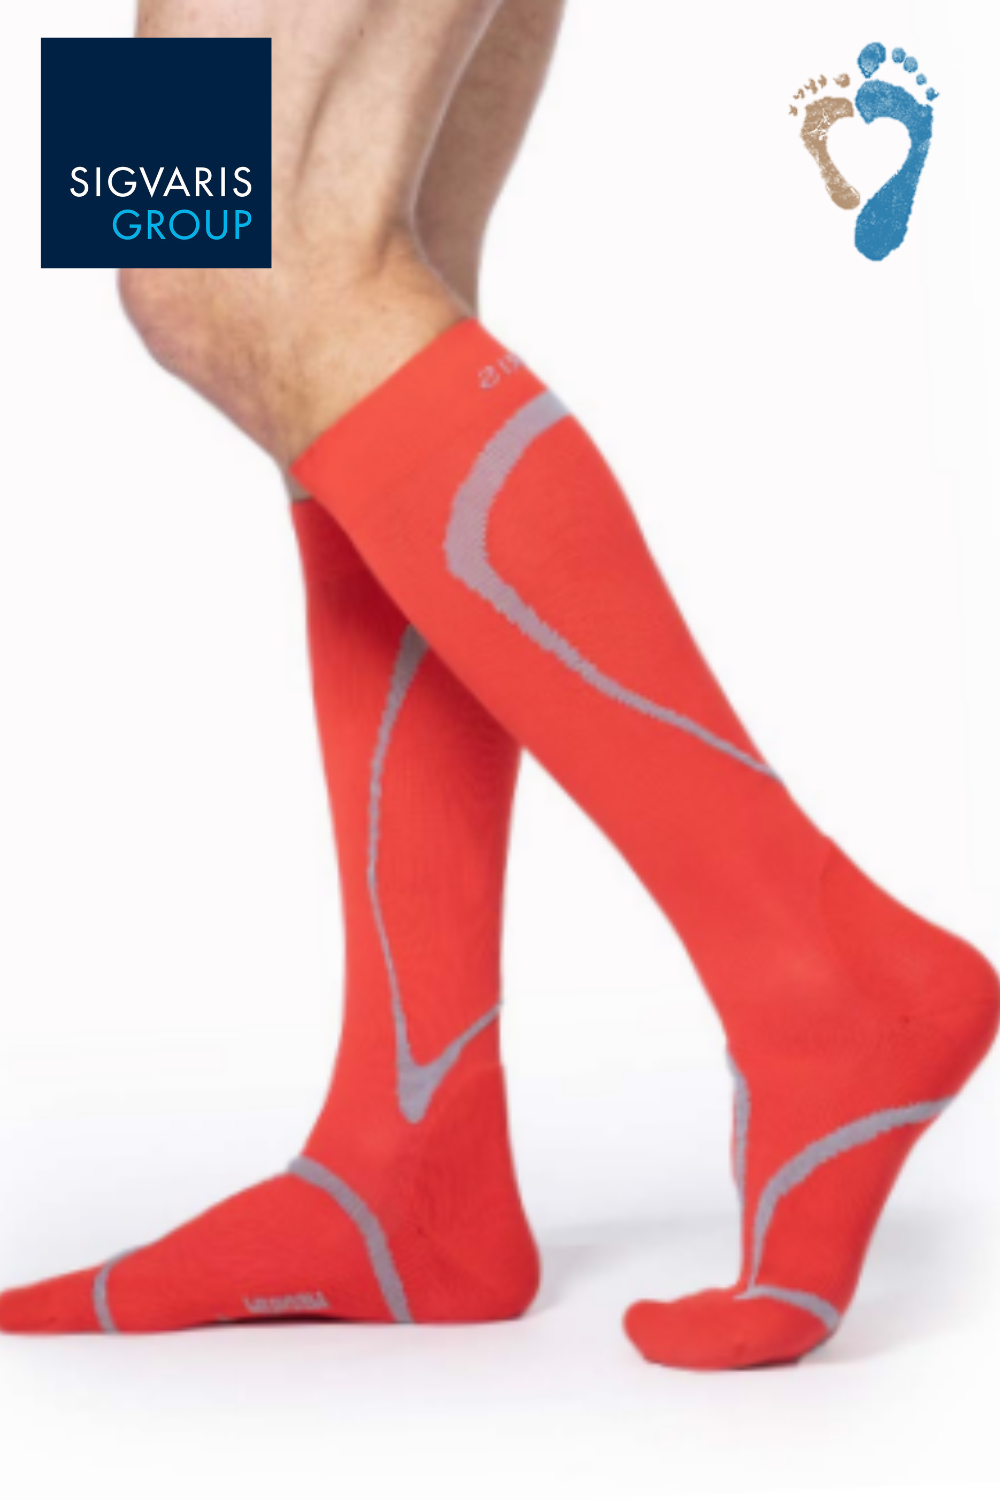 sigvaris sport sock